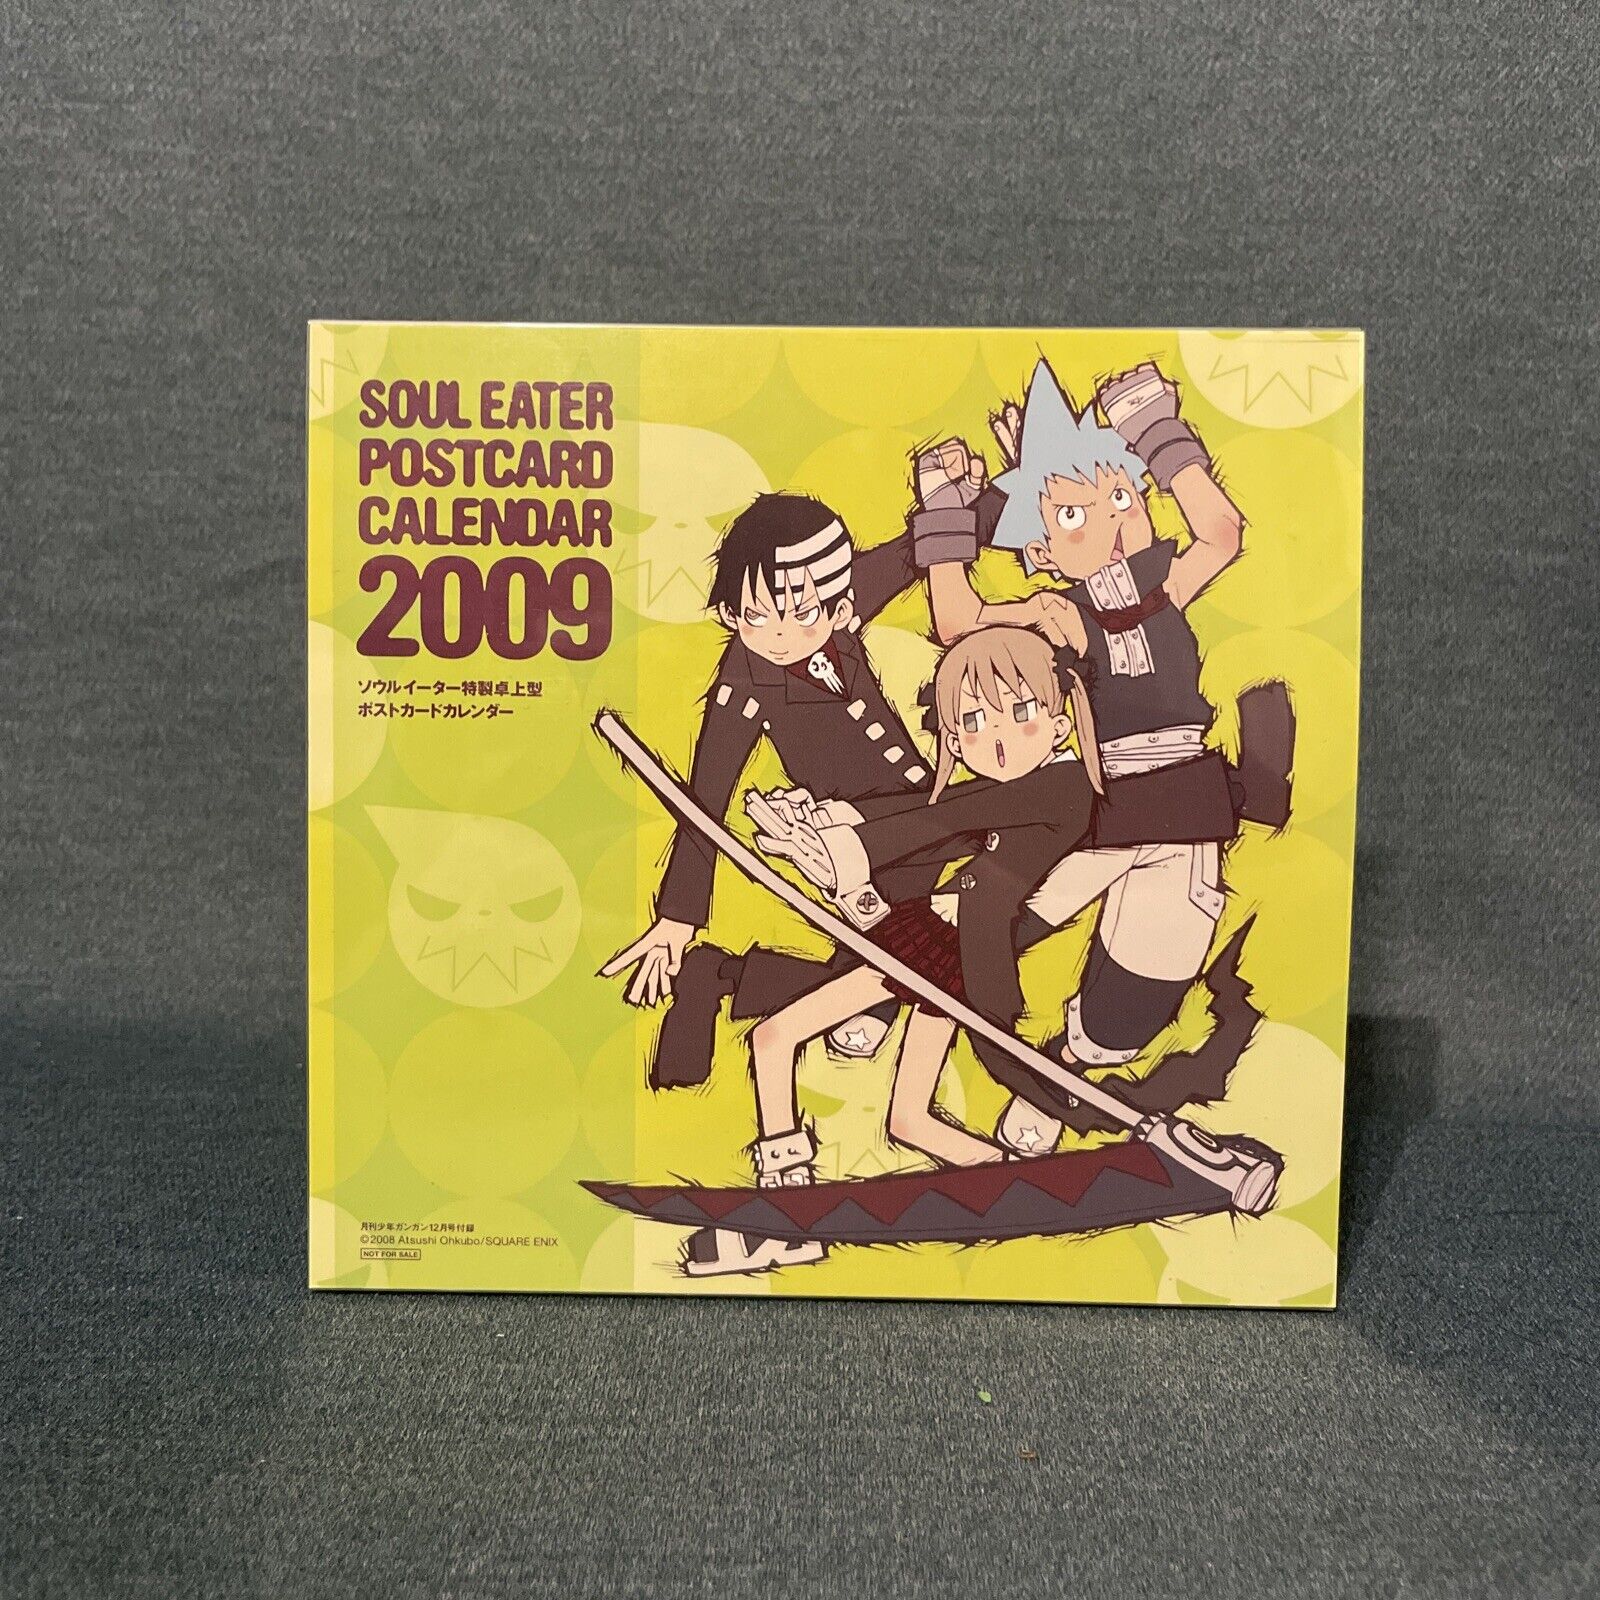 Soul eater calendar 2009 vintage anime promo NFS Anime game promo square enix